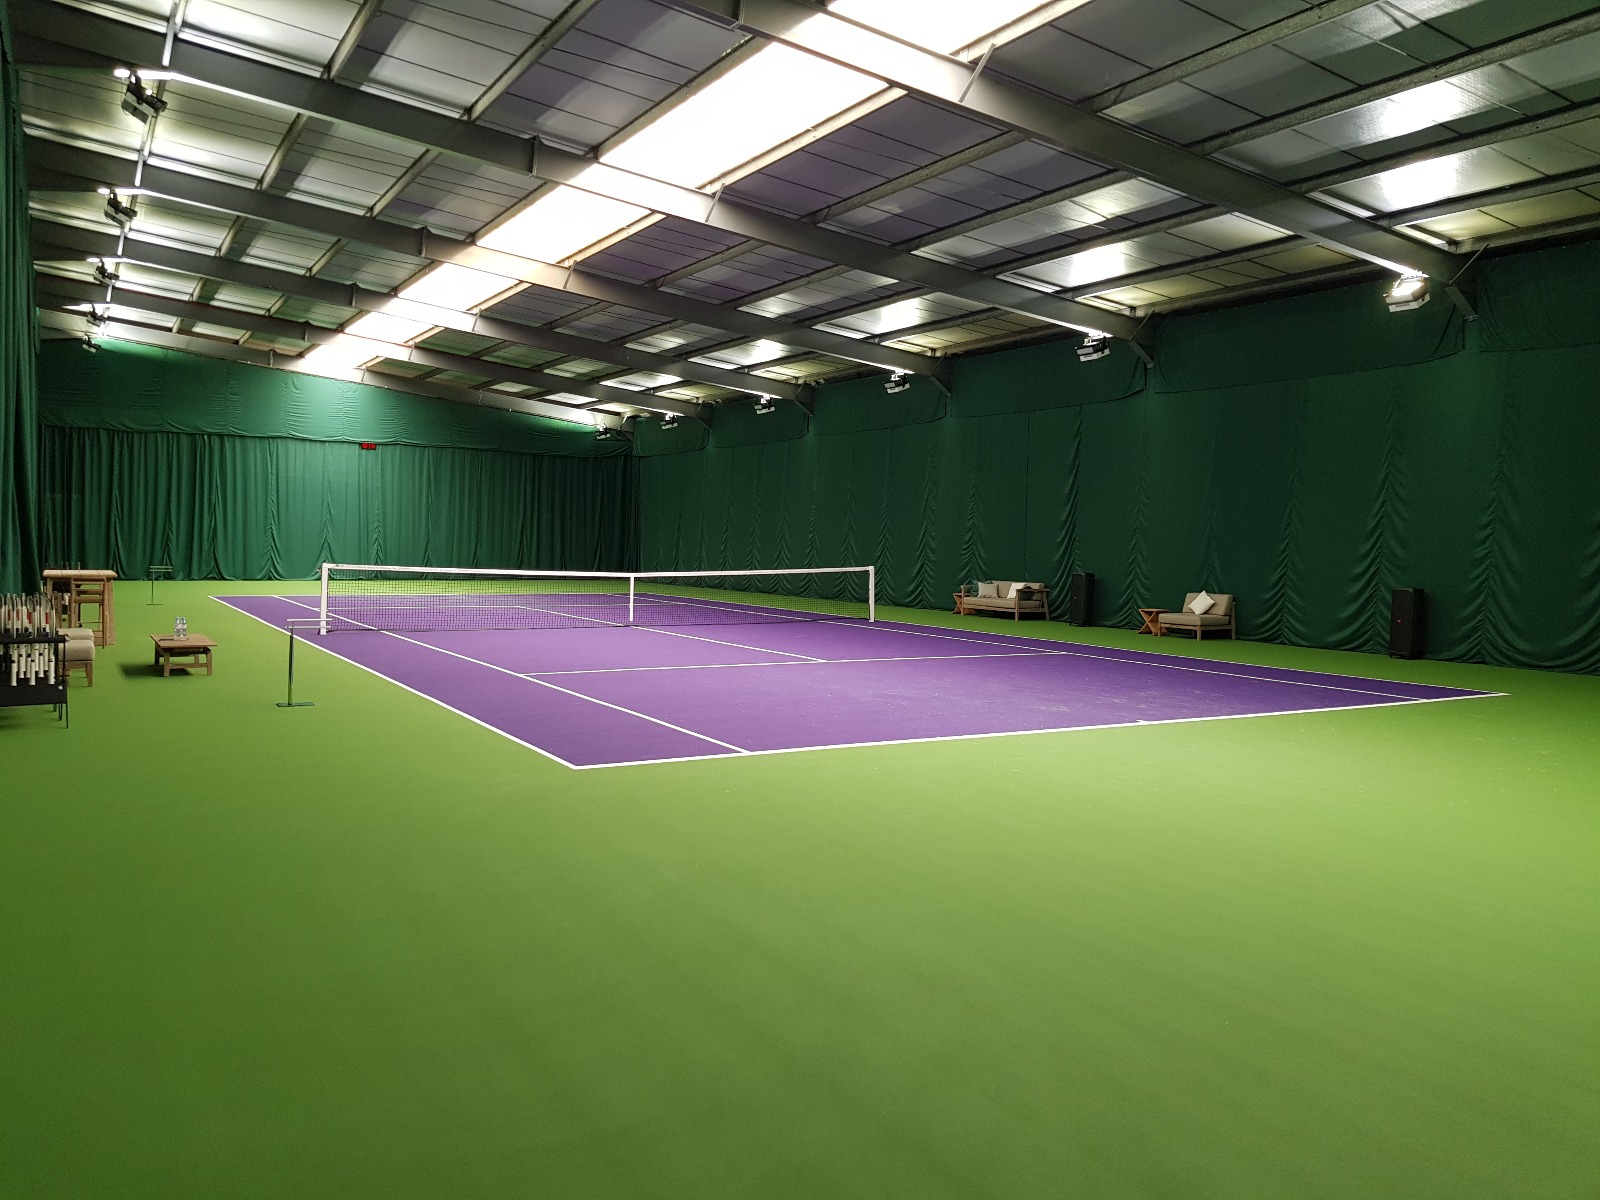 Indoor tennis hall perimeter drapes